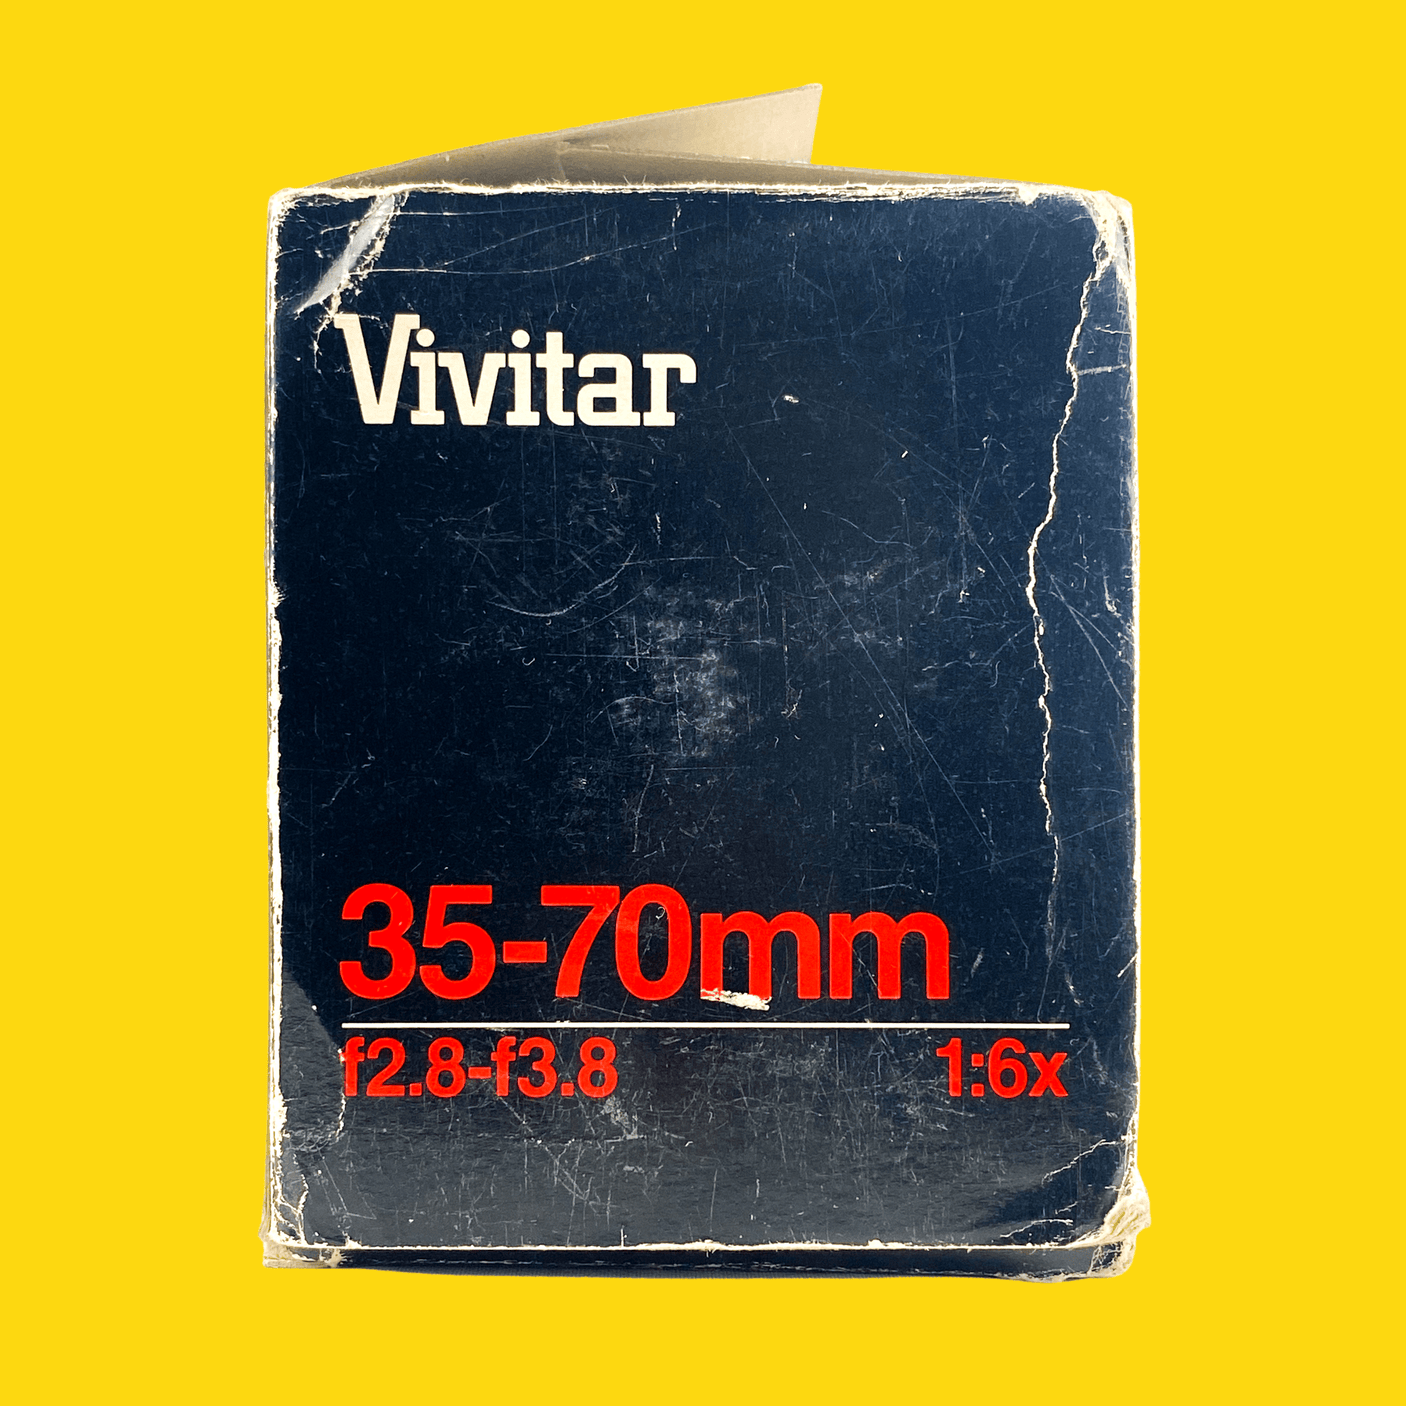 Vivitar Macro 35-70 F3.8 Lens (Boxed)